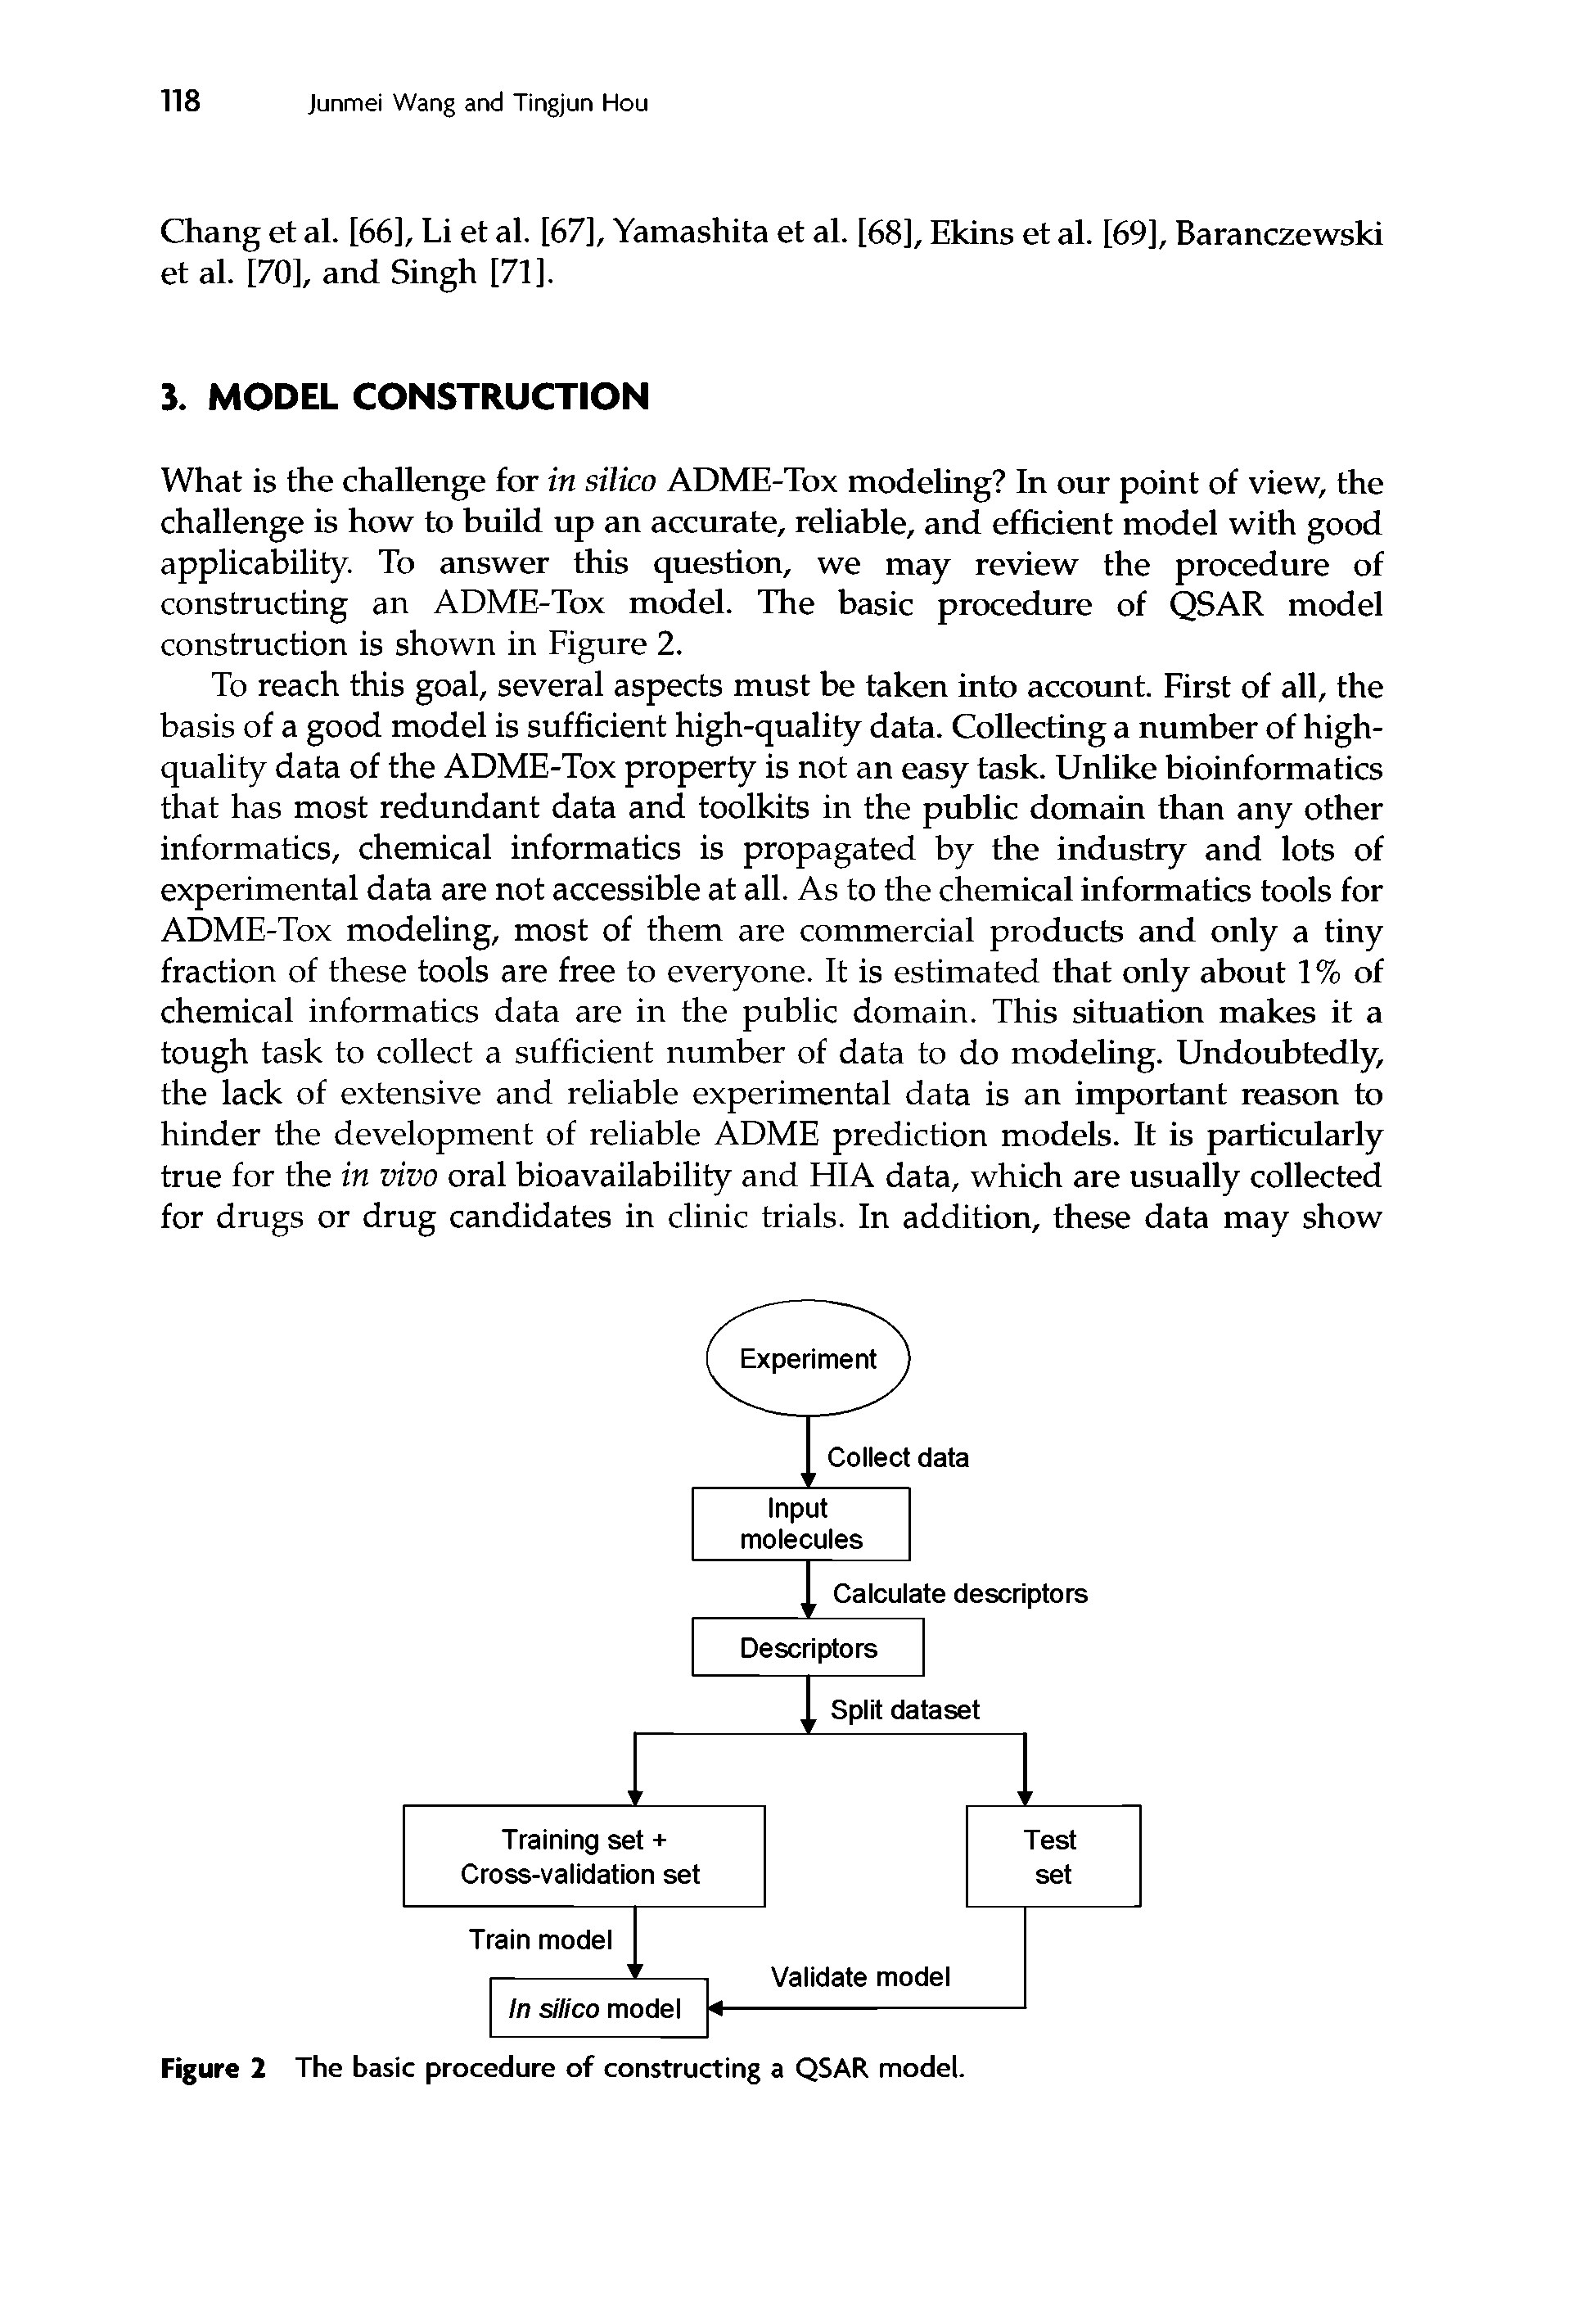 Figure 2 The basic procedure of constructing a QSAR model.